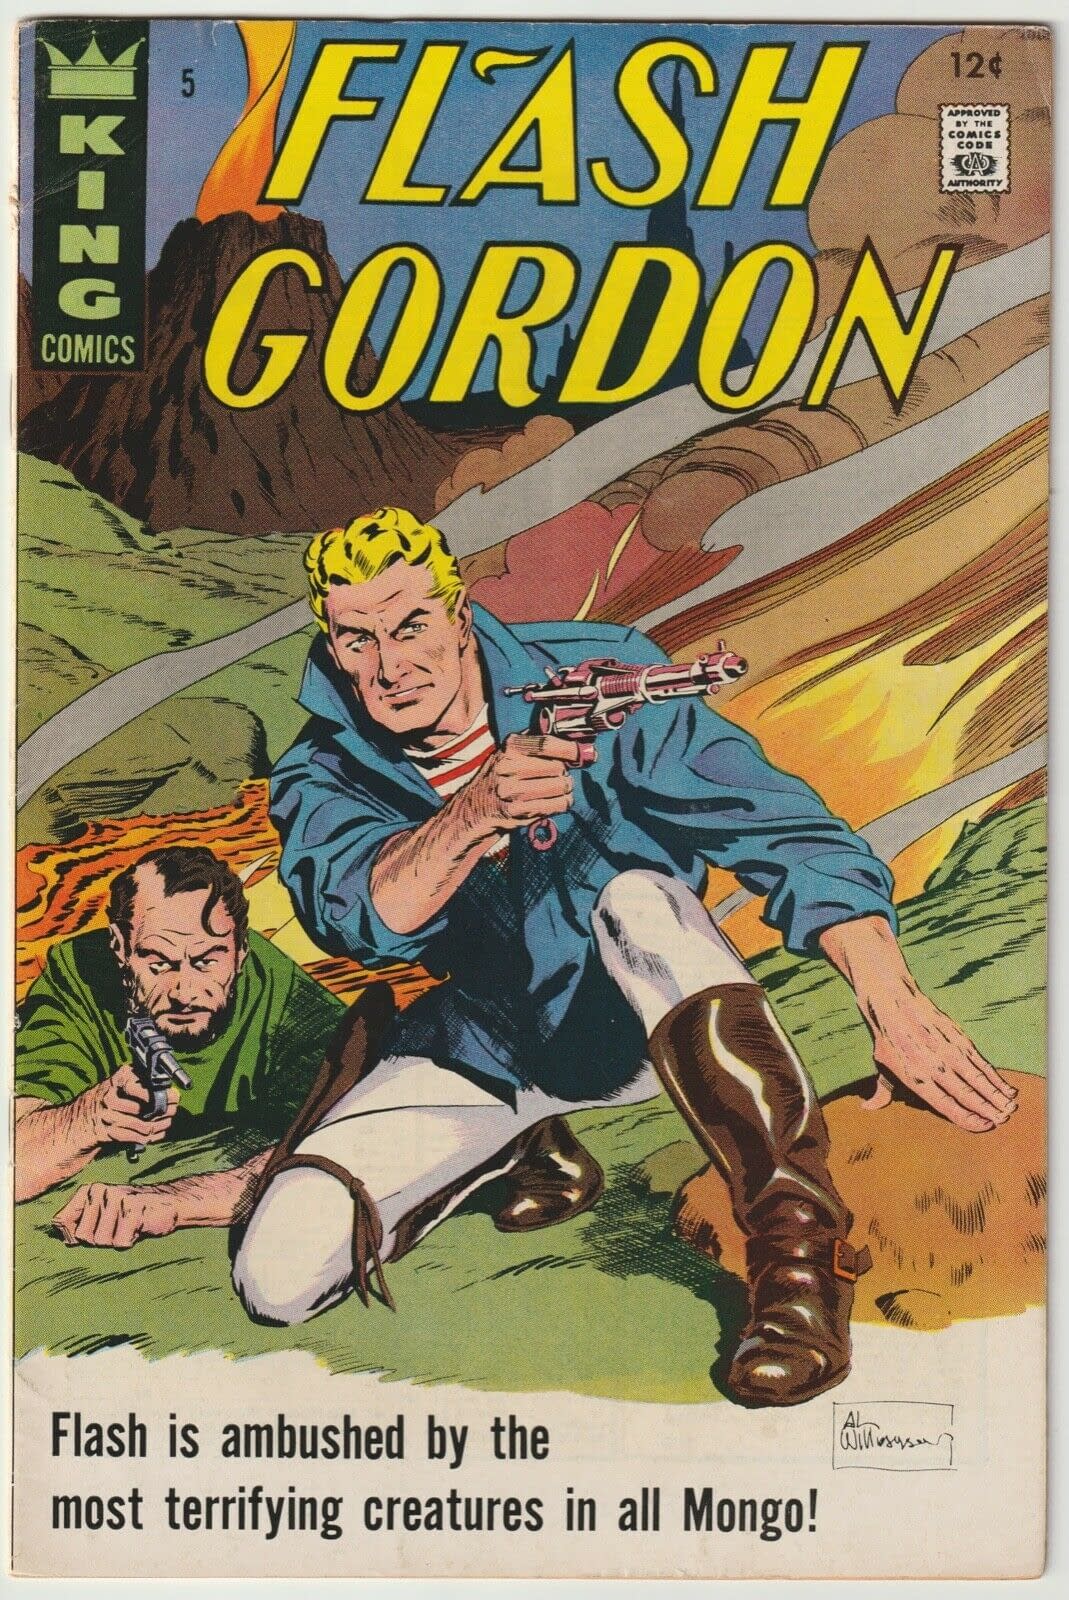 Gordon's alive! The untold story of Flash Gordon, Movies